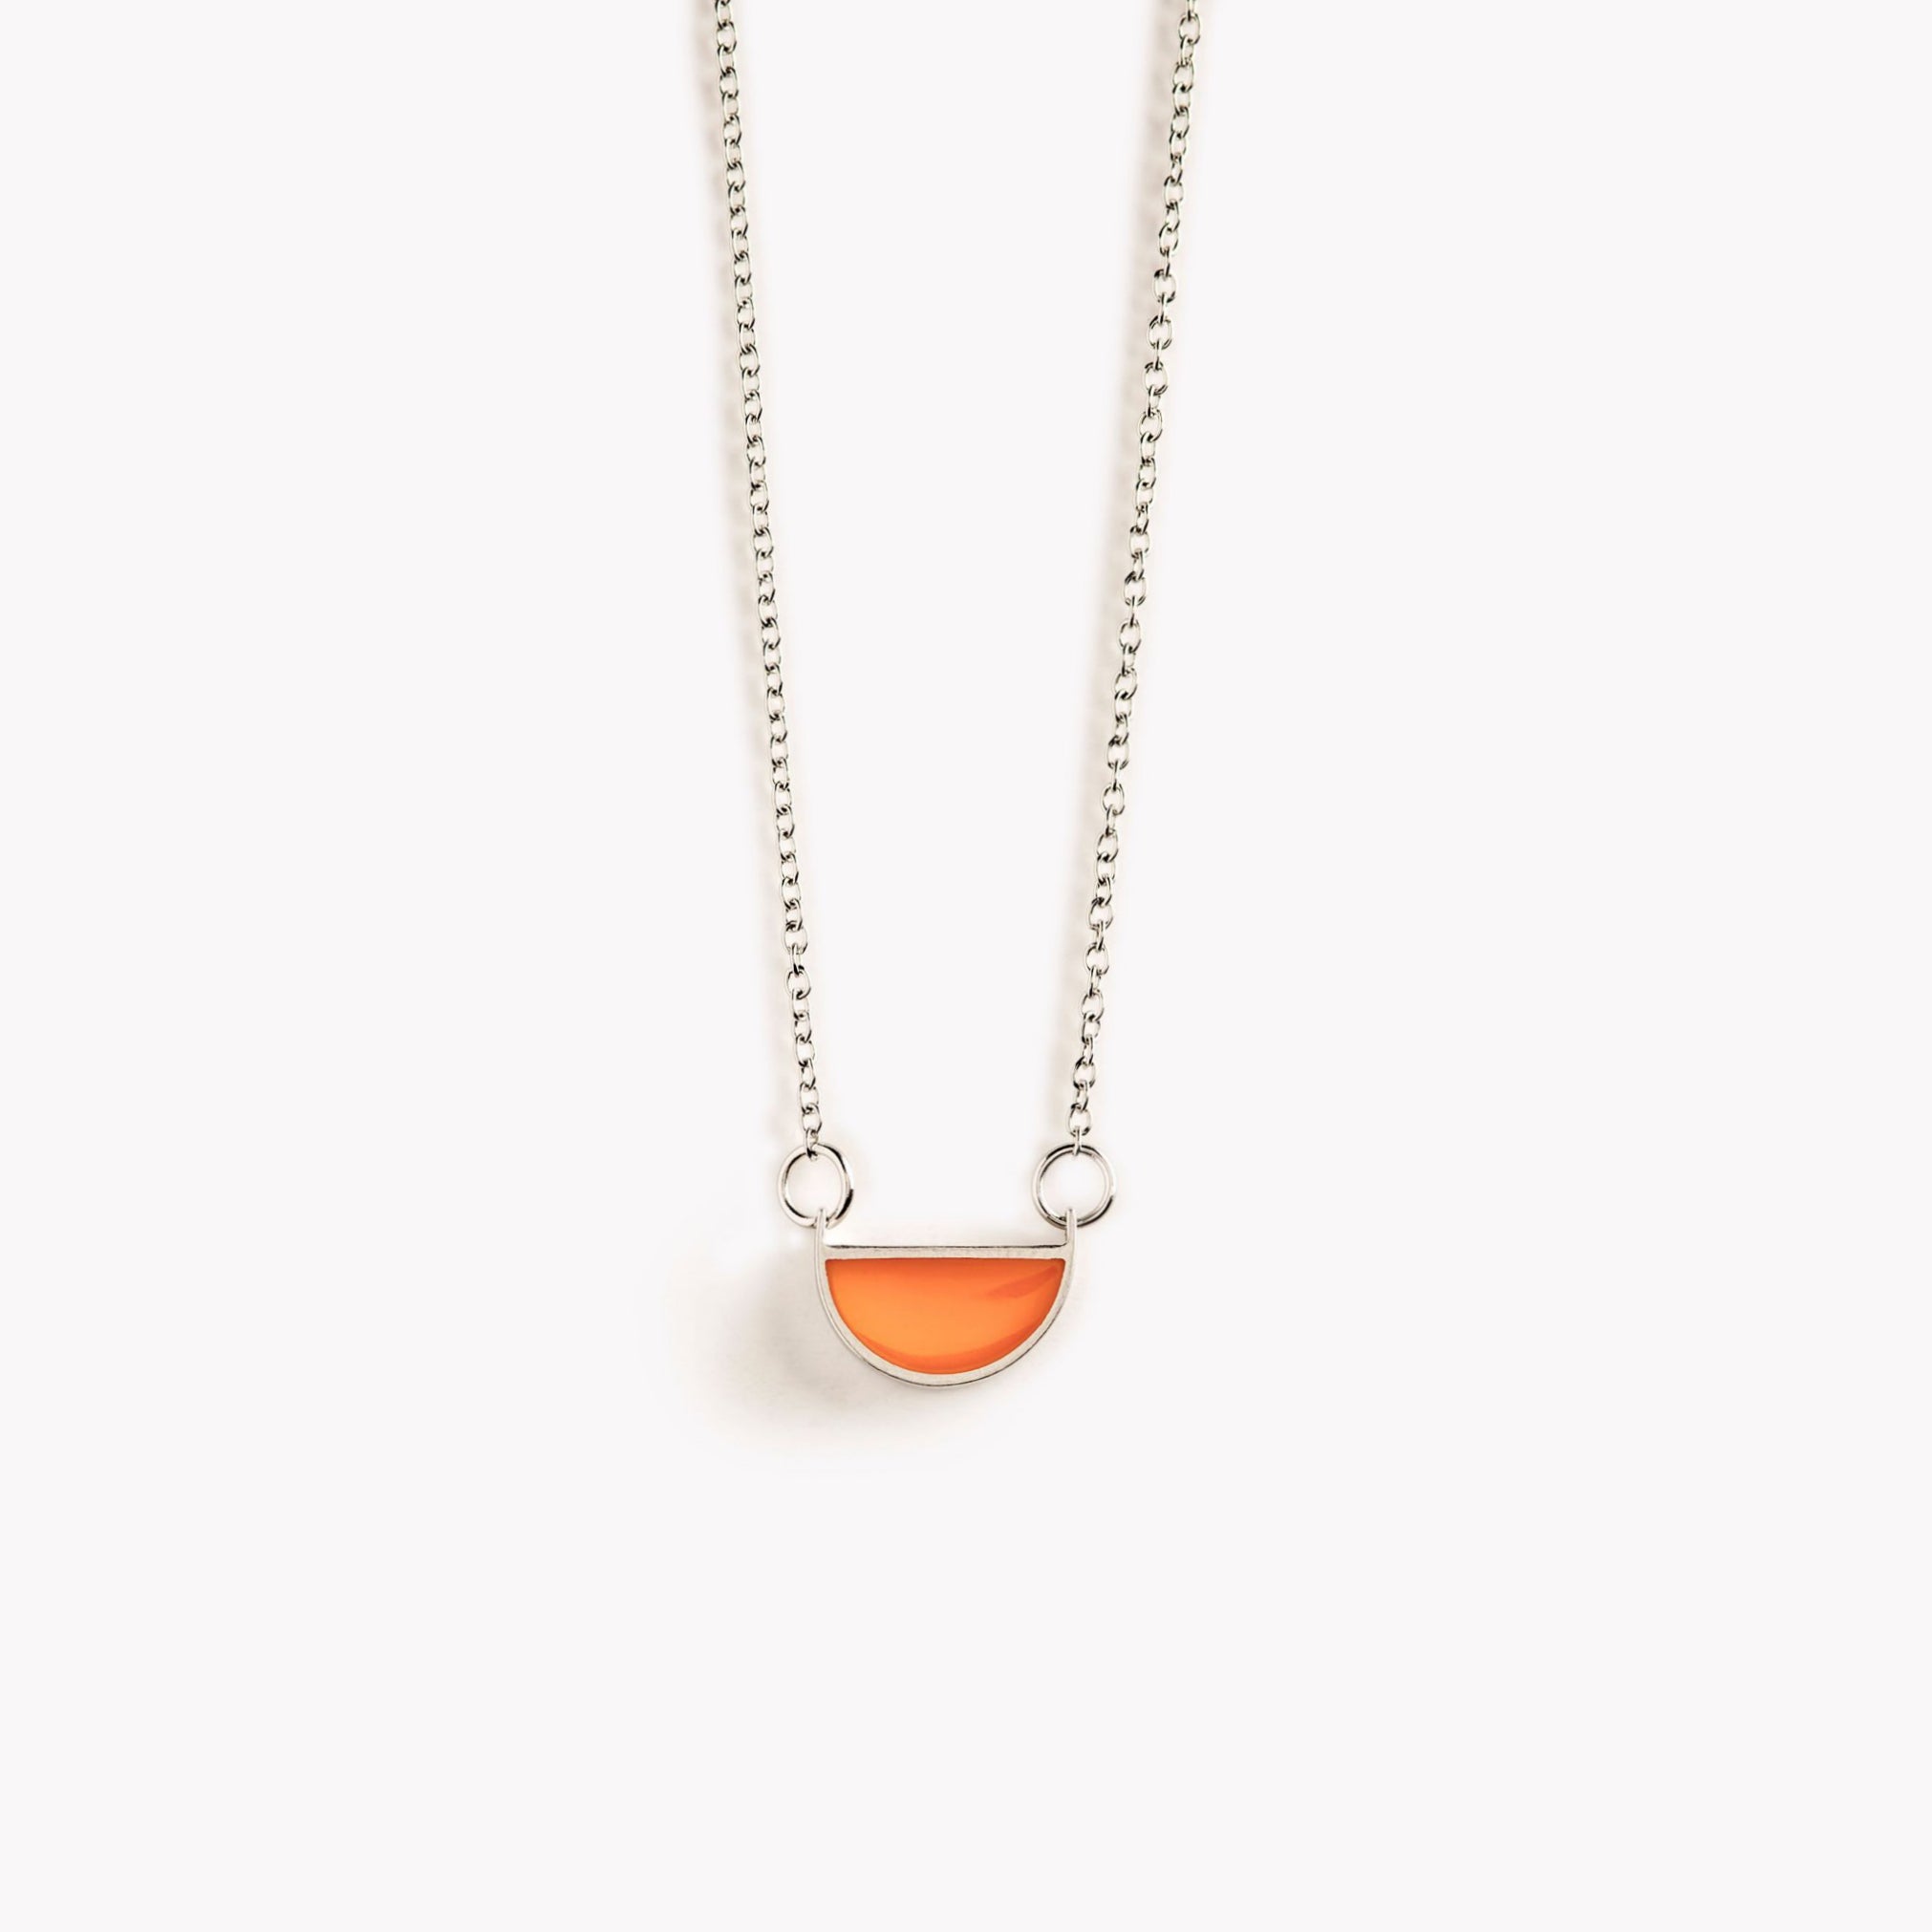 A simple, bright orange, half circle shaped pendant necklace.